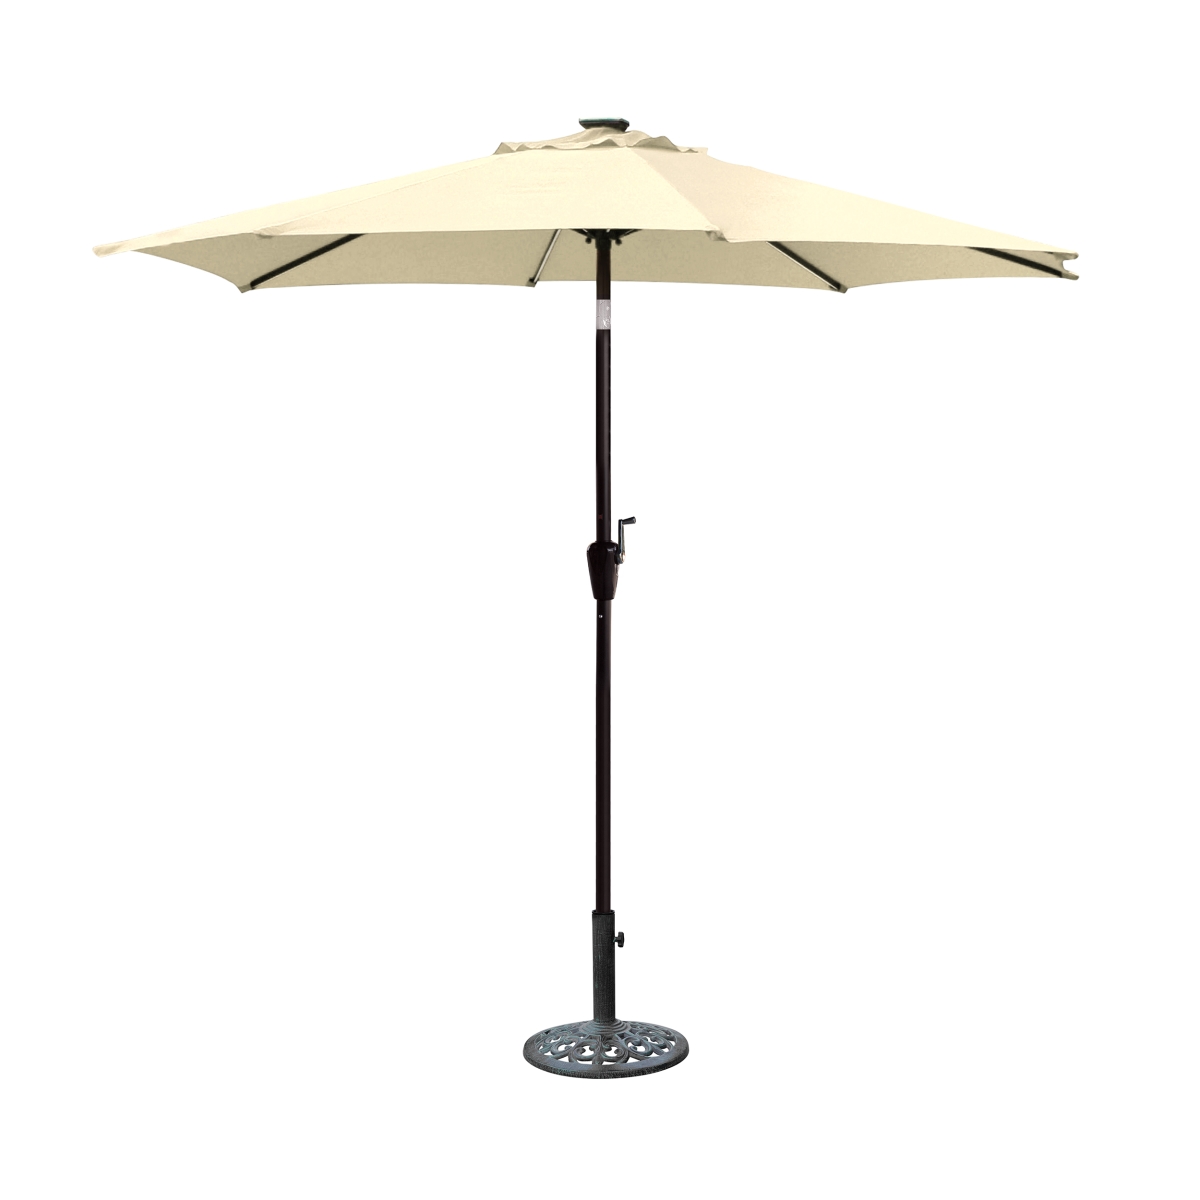 9 Ft. Aluminum Umbrella With Crank & Solar Guide Tubes - Brown Pole & Tan Fabric